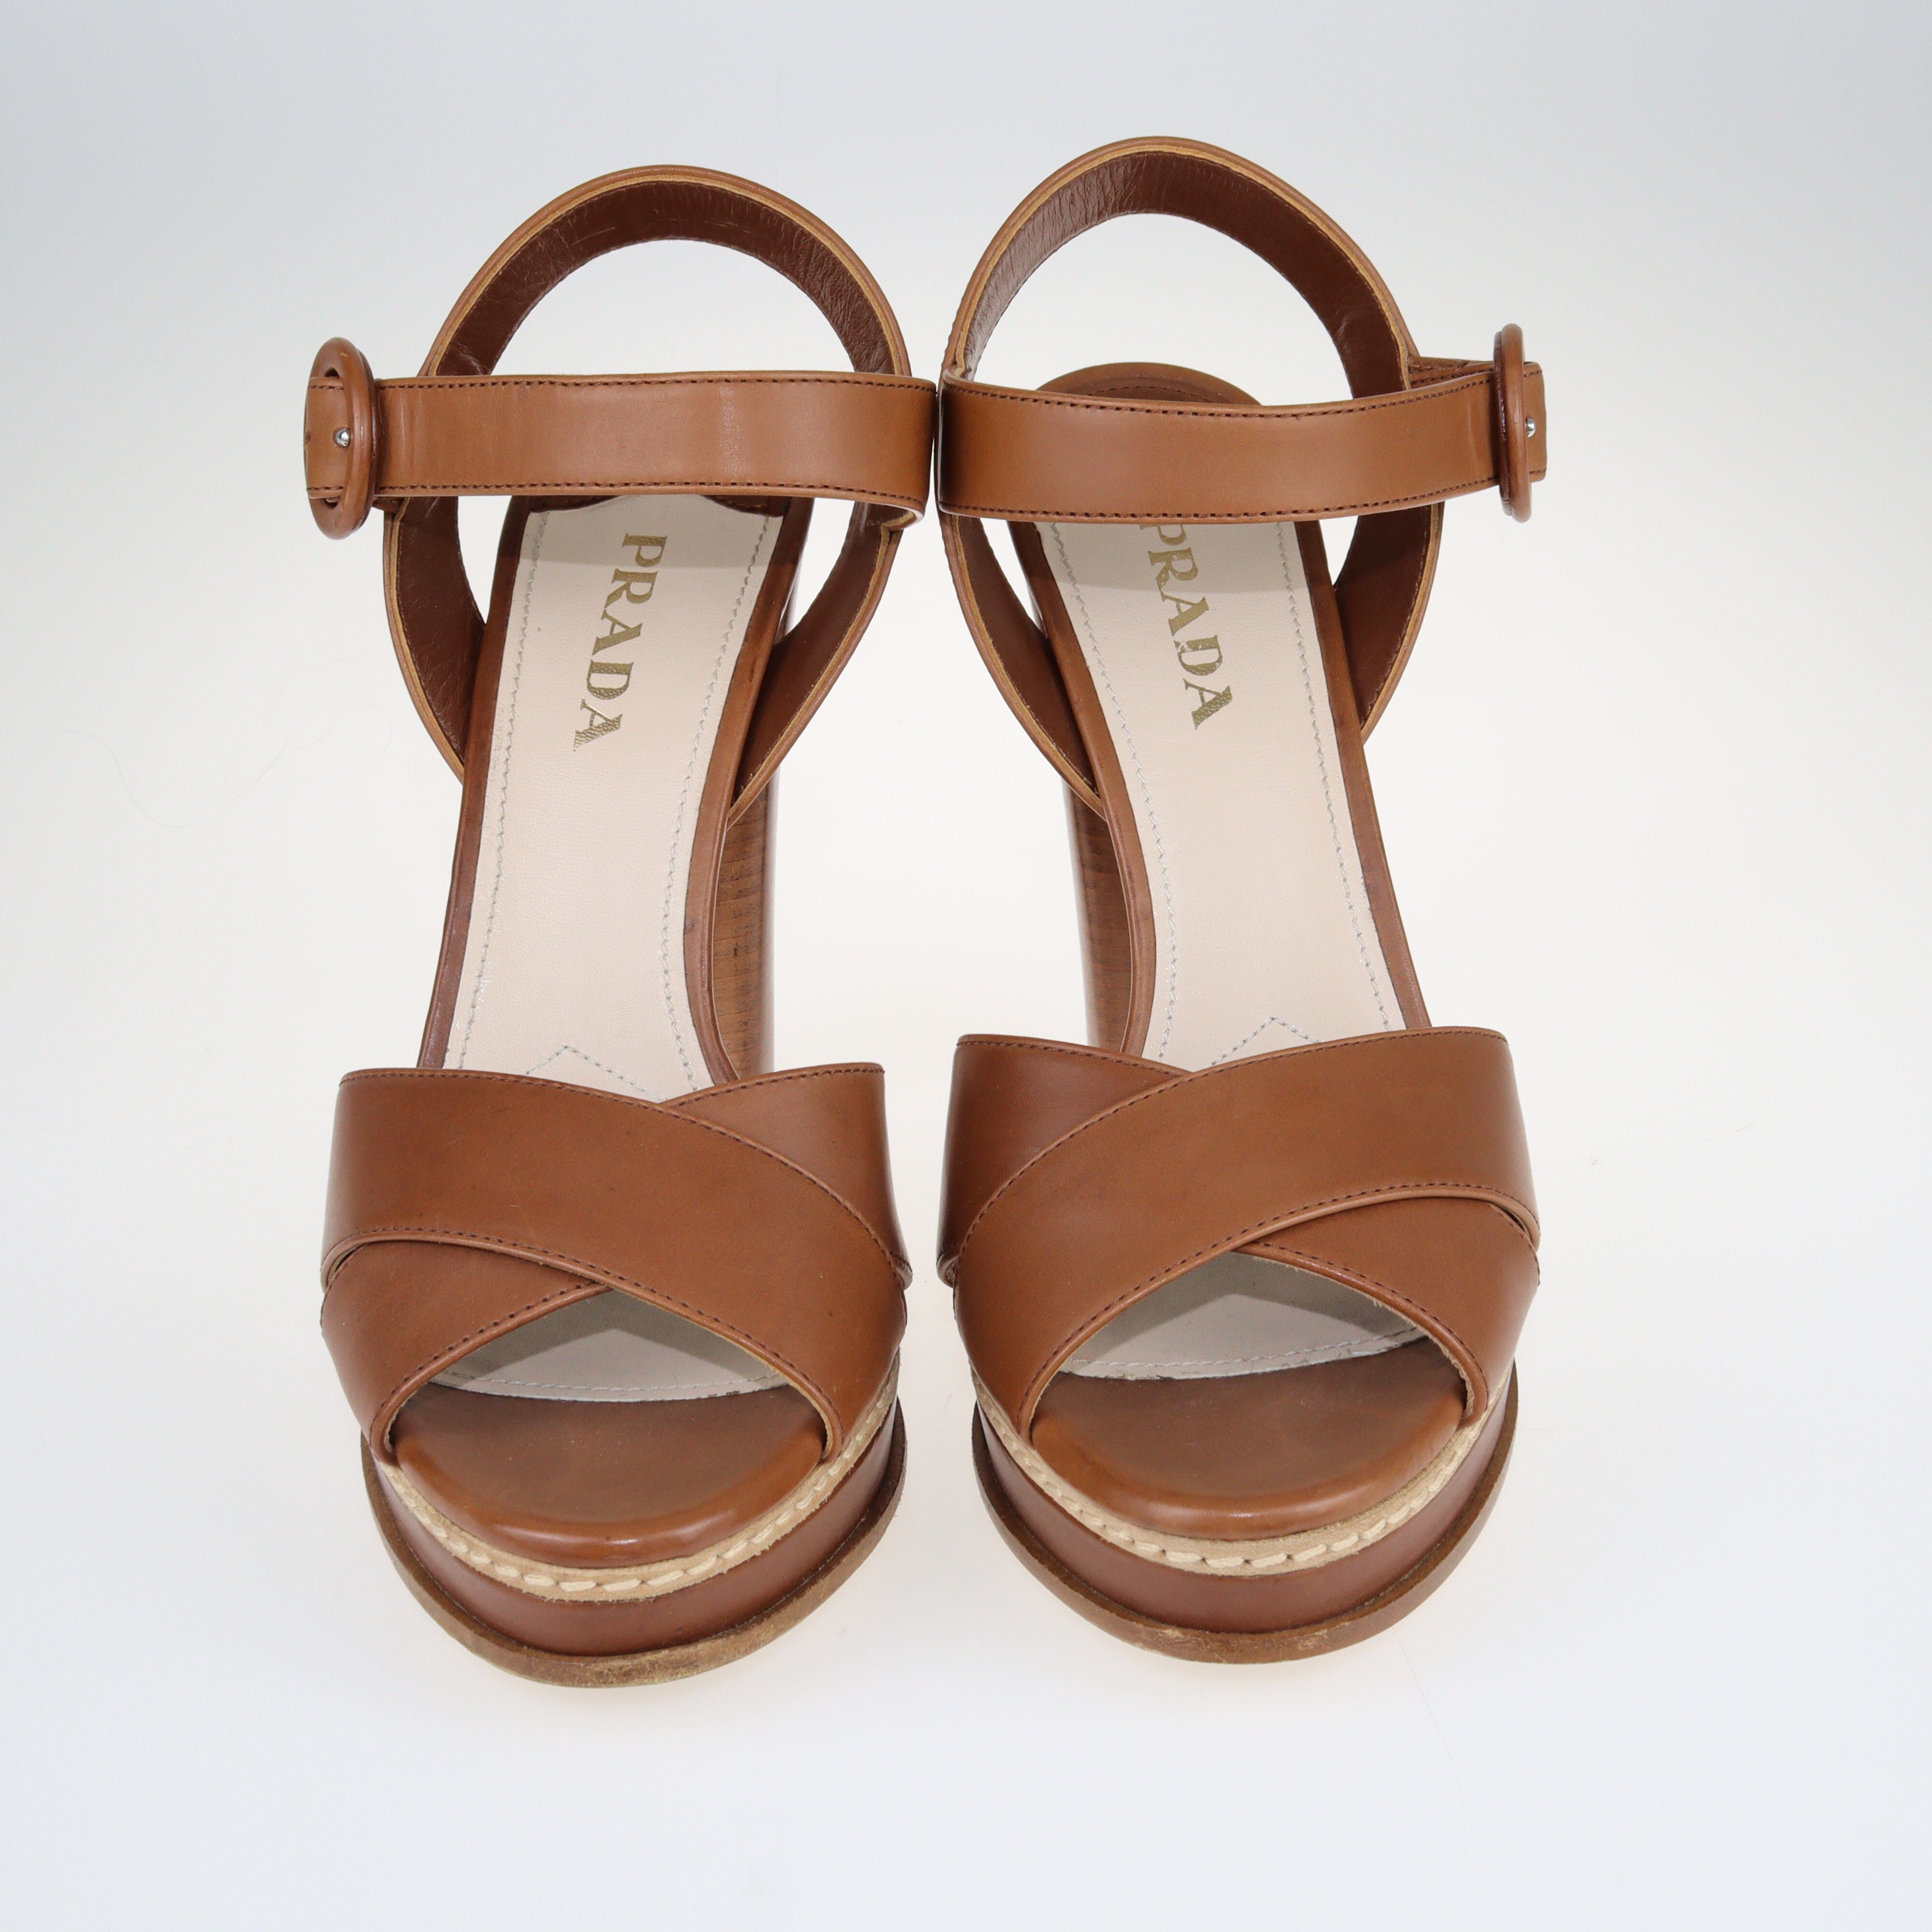 Brown Crisscross Ankle Strap Block Heel Platform Sandals Shoes Prada 